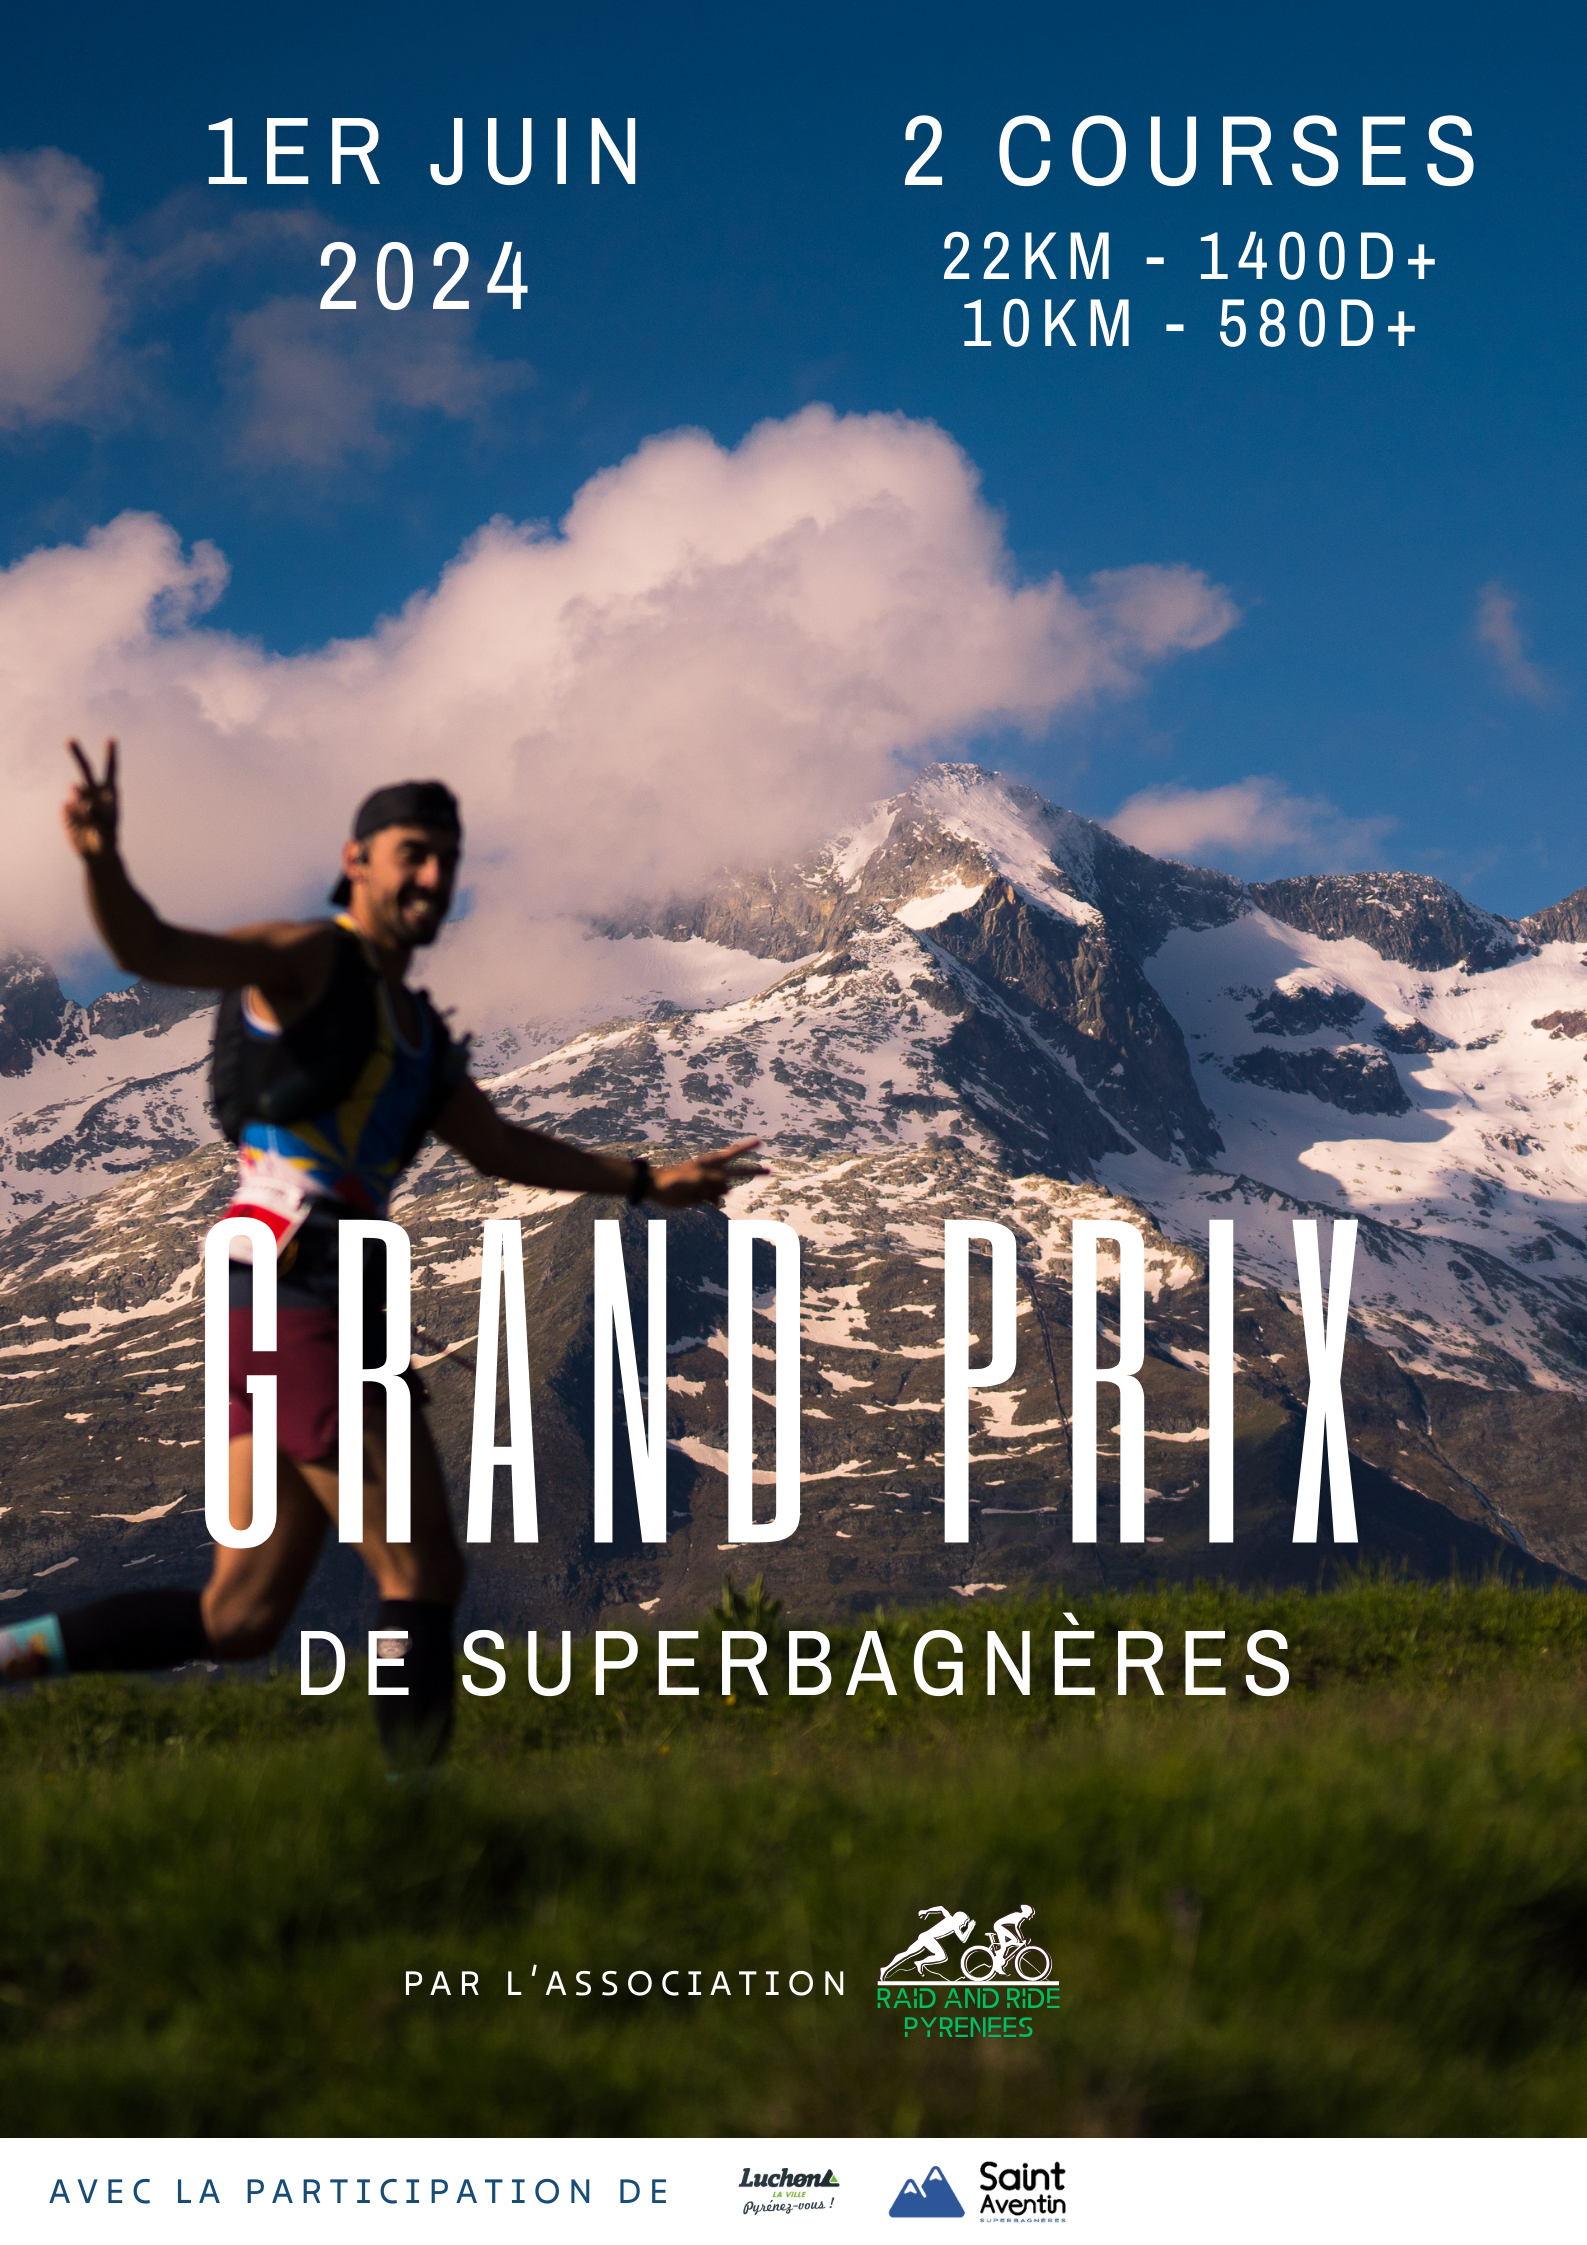 TRAIL GRAND PRIX DE SUPERBAGNERES